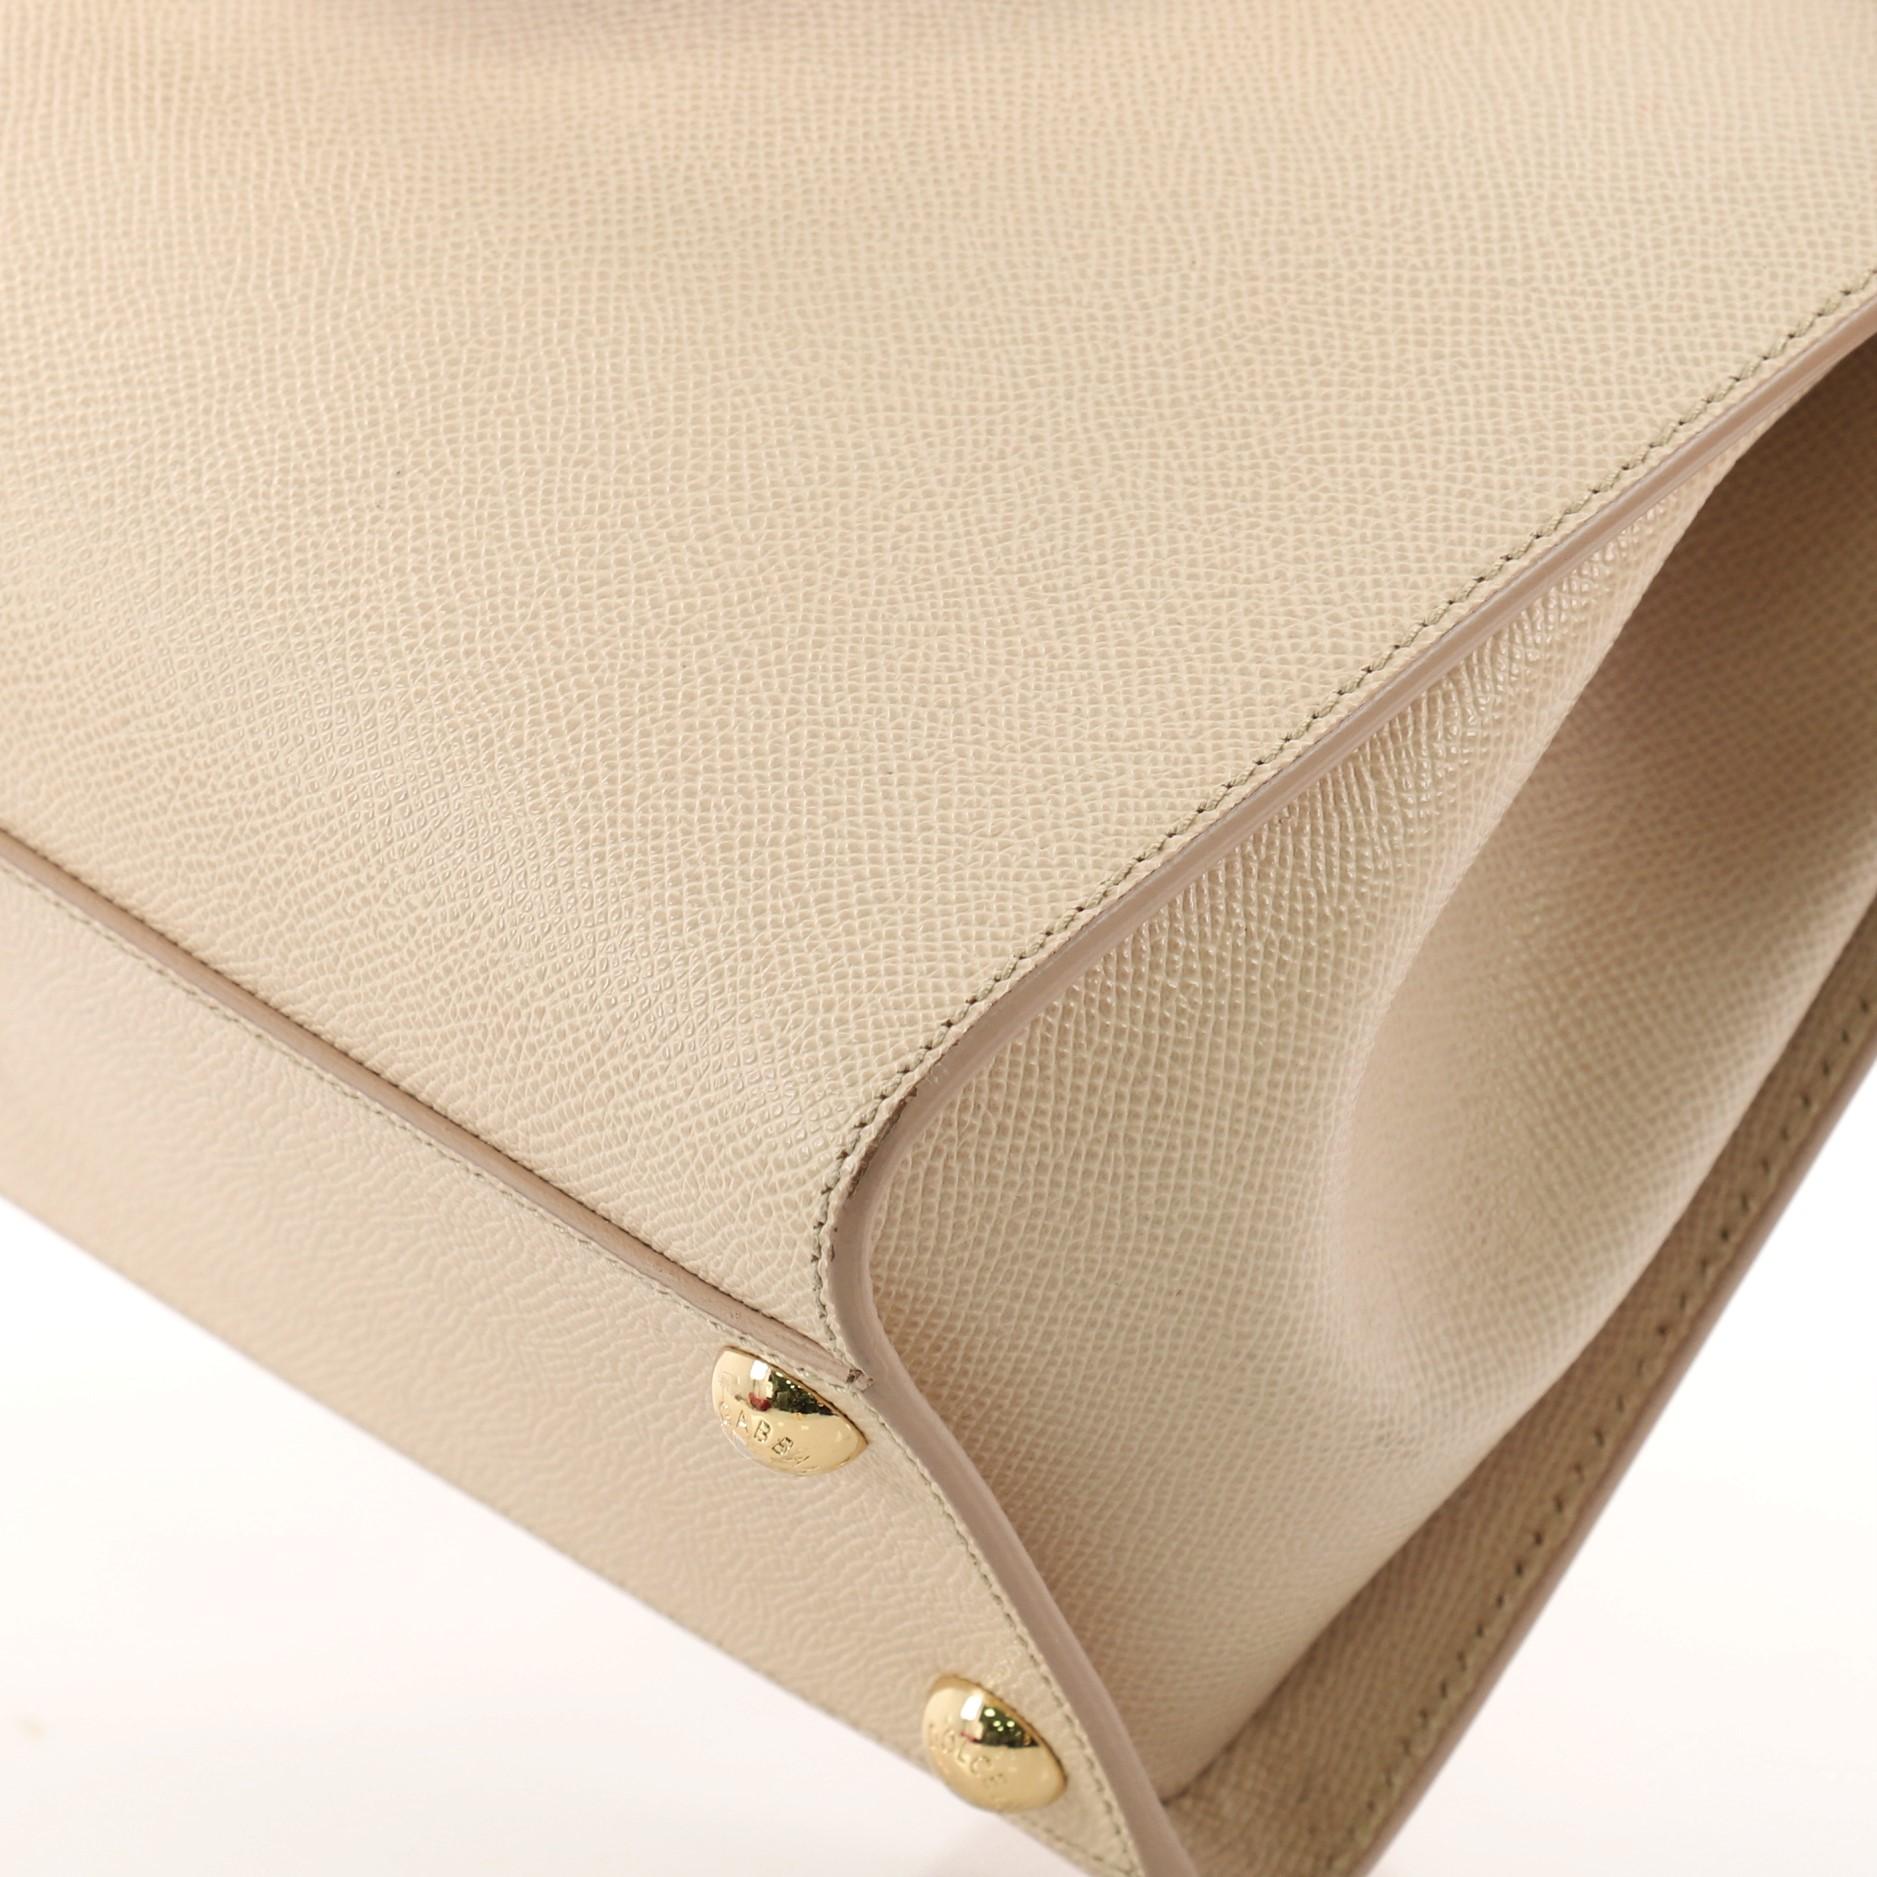 Dolce & Gabbana Convertible Lock Compartment Handbag Leather Medium 2